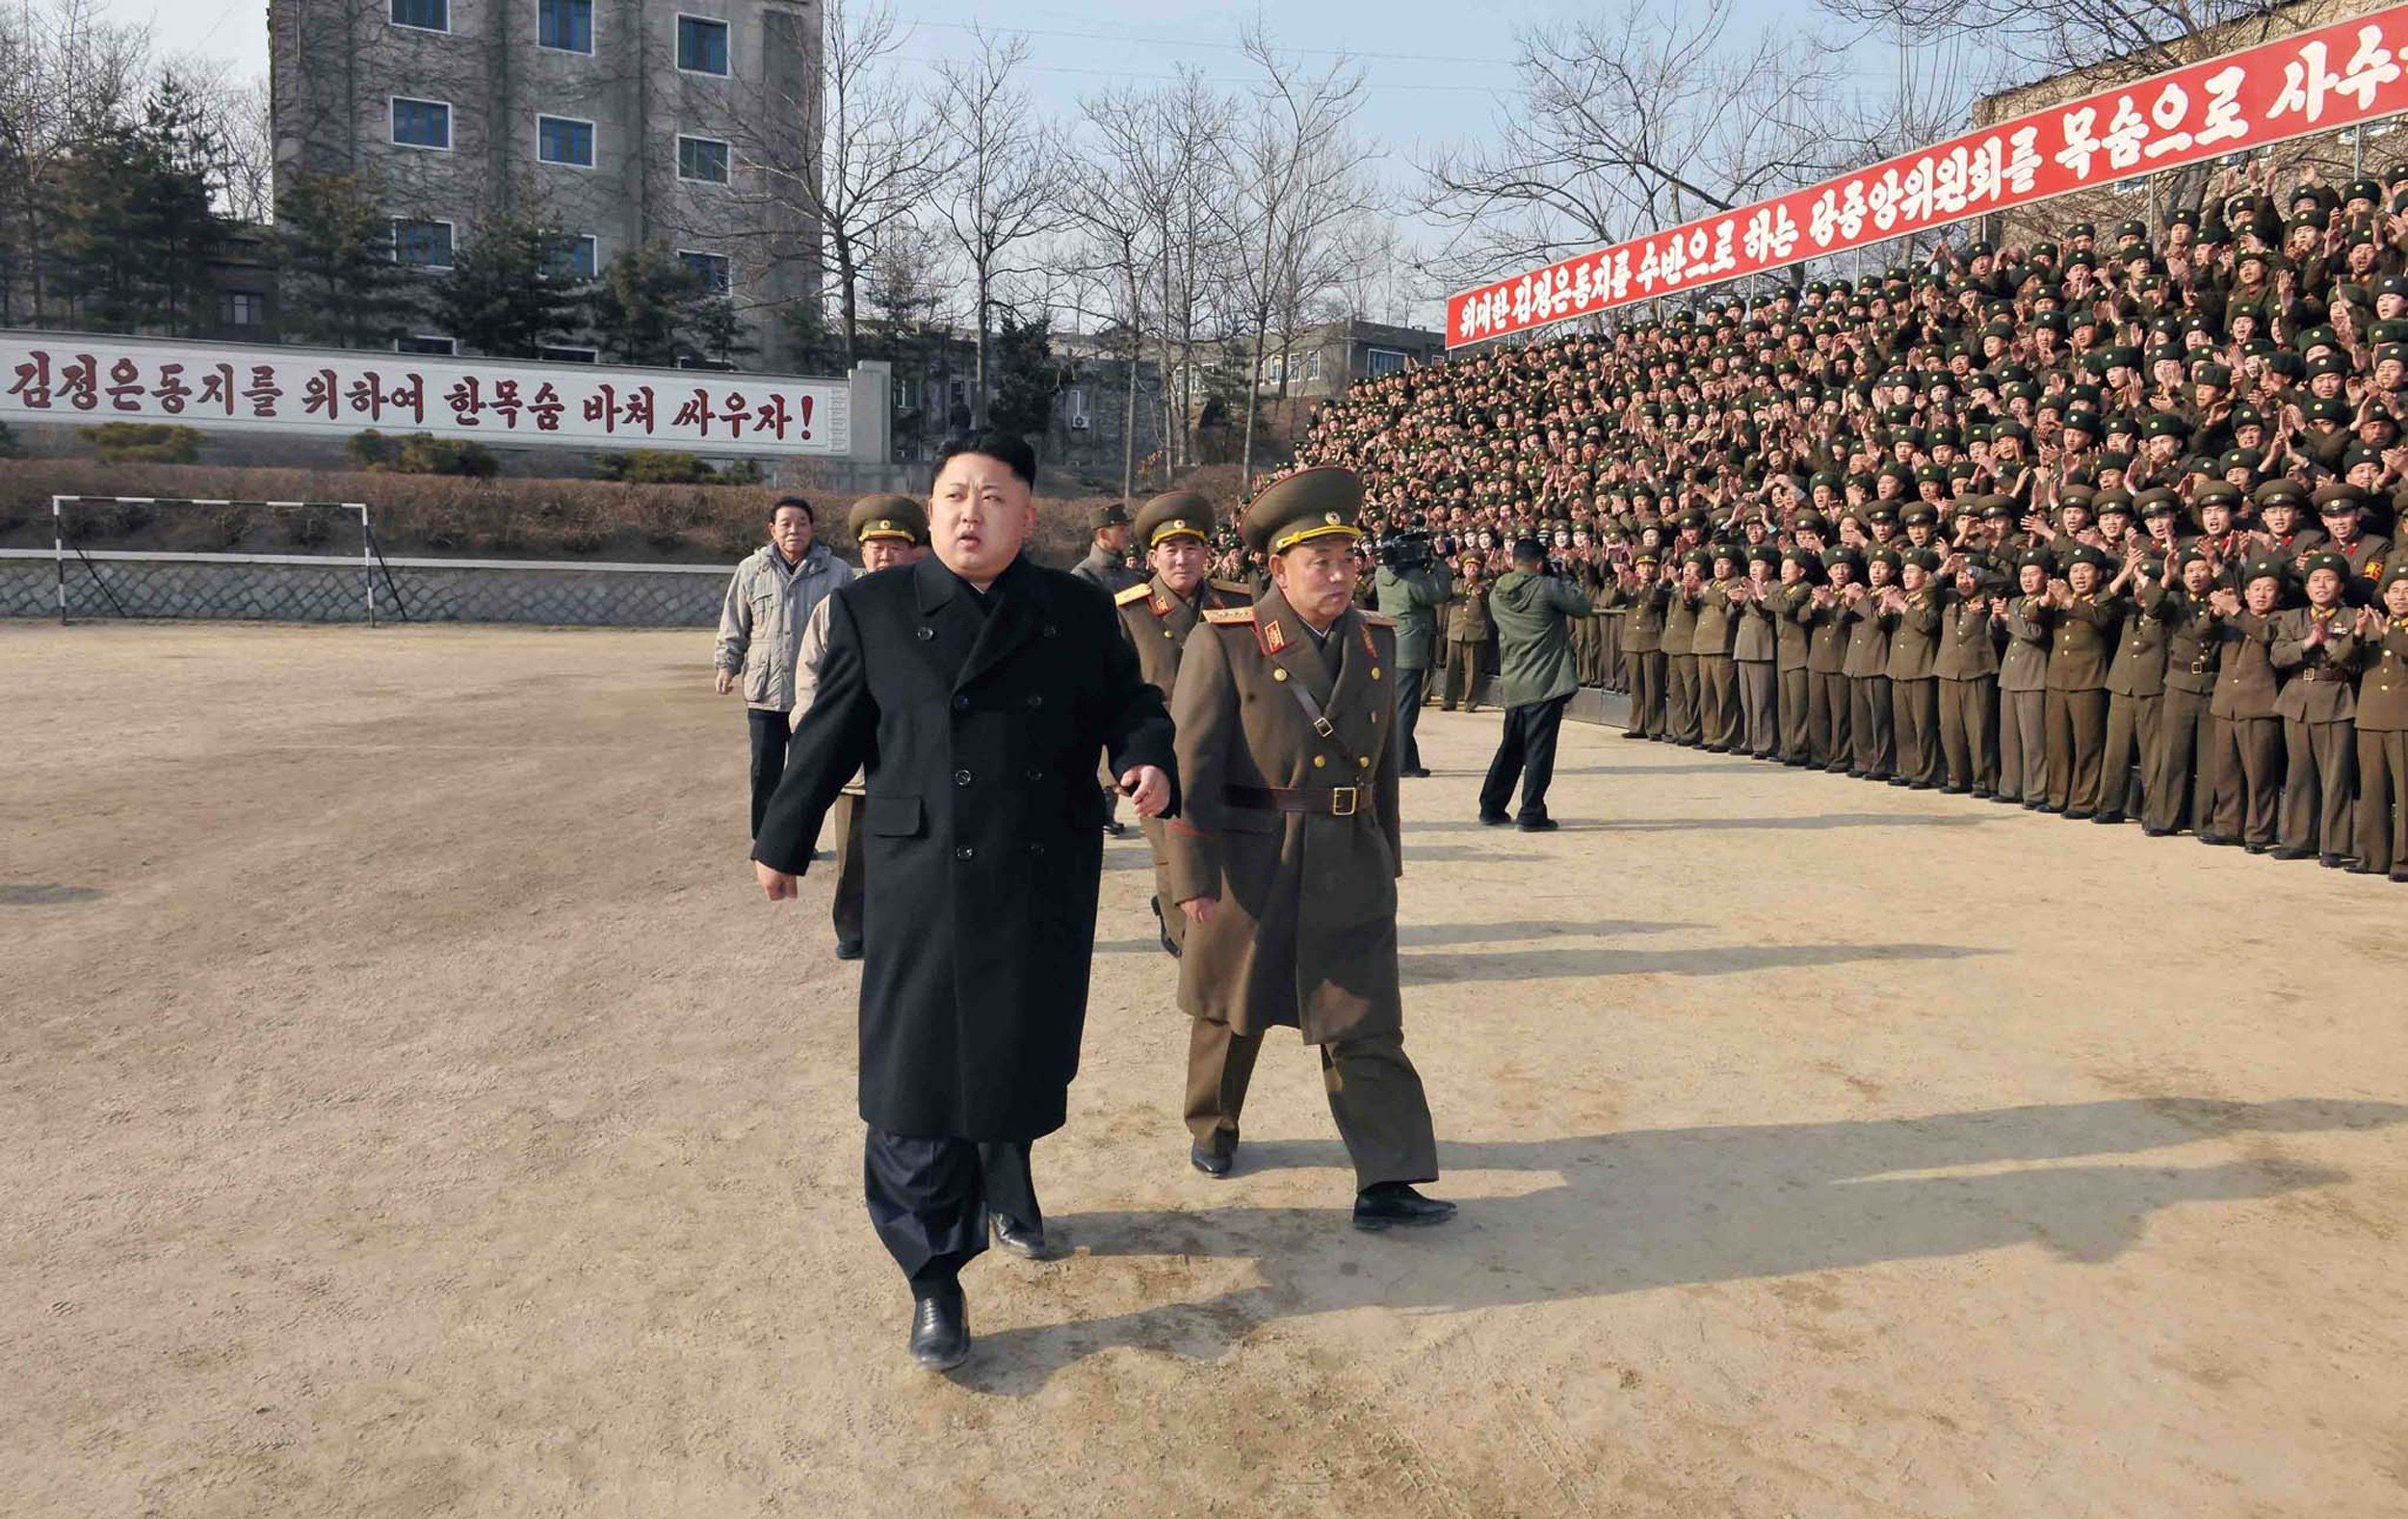 Kim Jong-un with his army